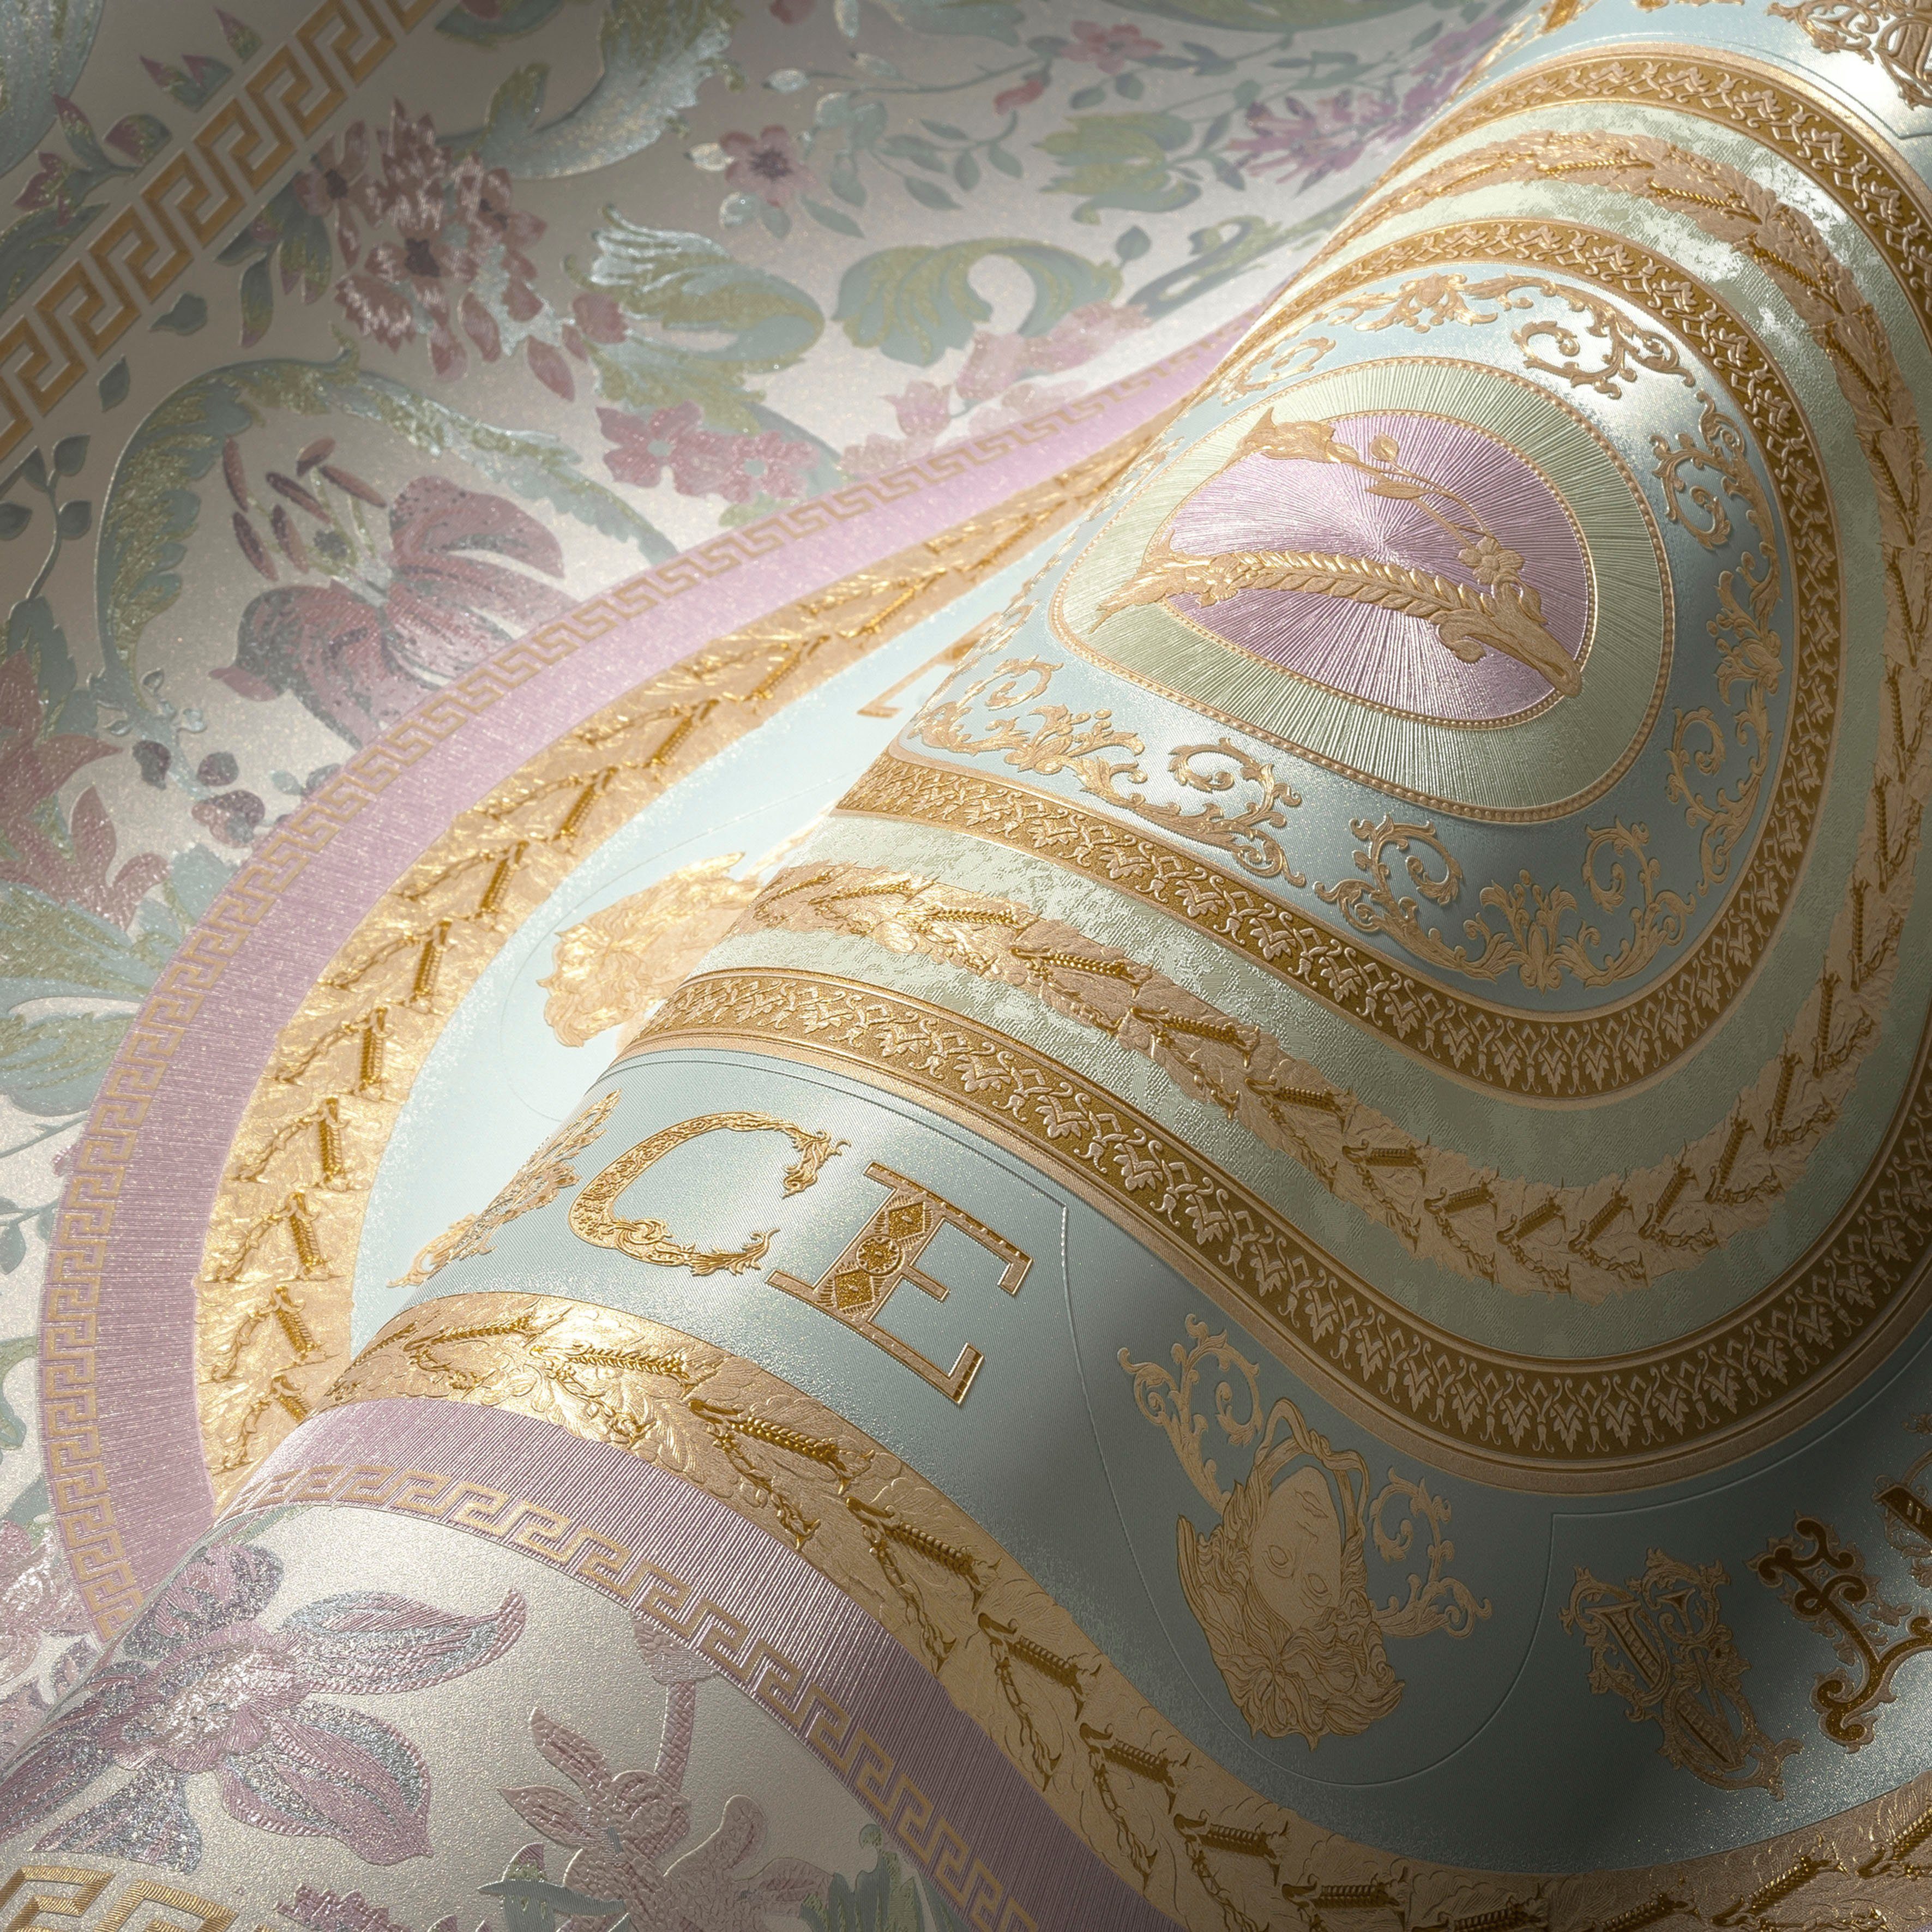 Designertapete, Floral Design, leicht St), auffallende Vliestapete Versace 5 glänzend, (1 Wallpaper Versace mint/goldfarben/rosa strukturiert, leicht Fliesen-Tapete